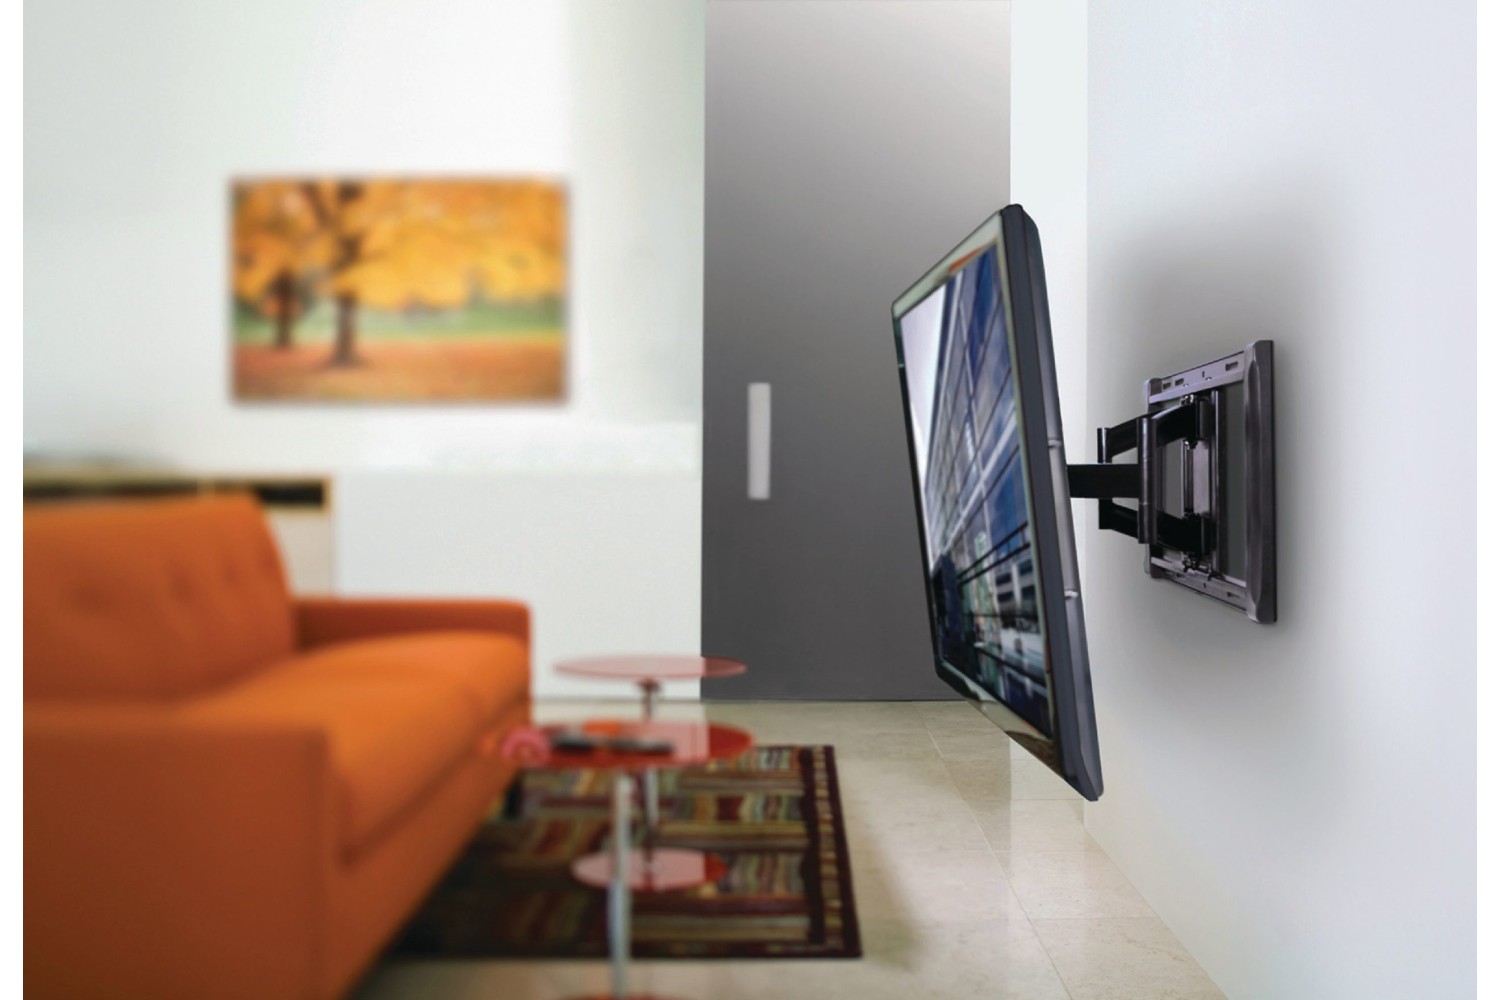 Как надежно повесить телевизор на стену